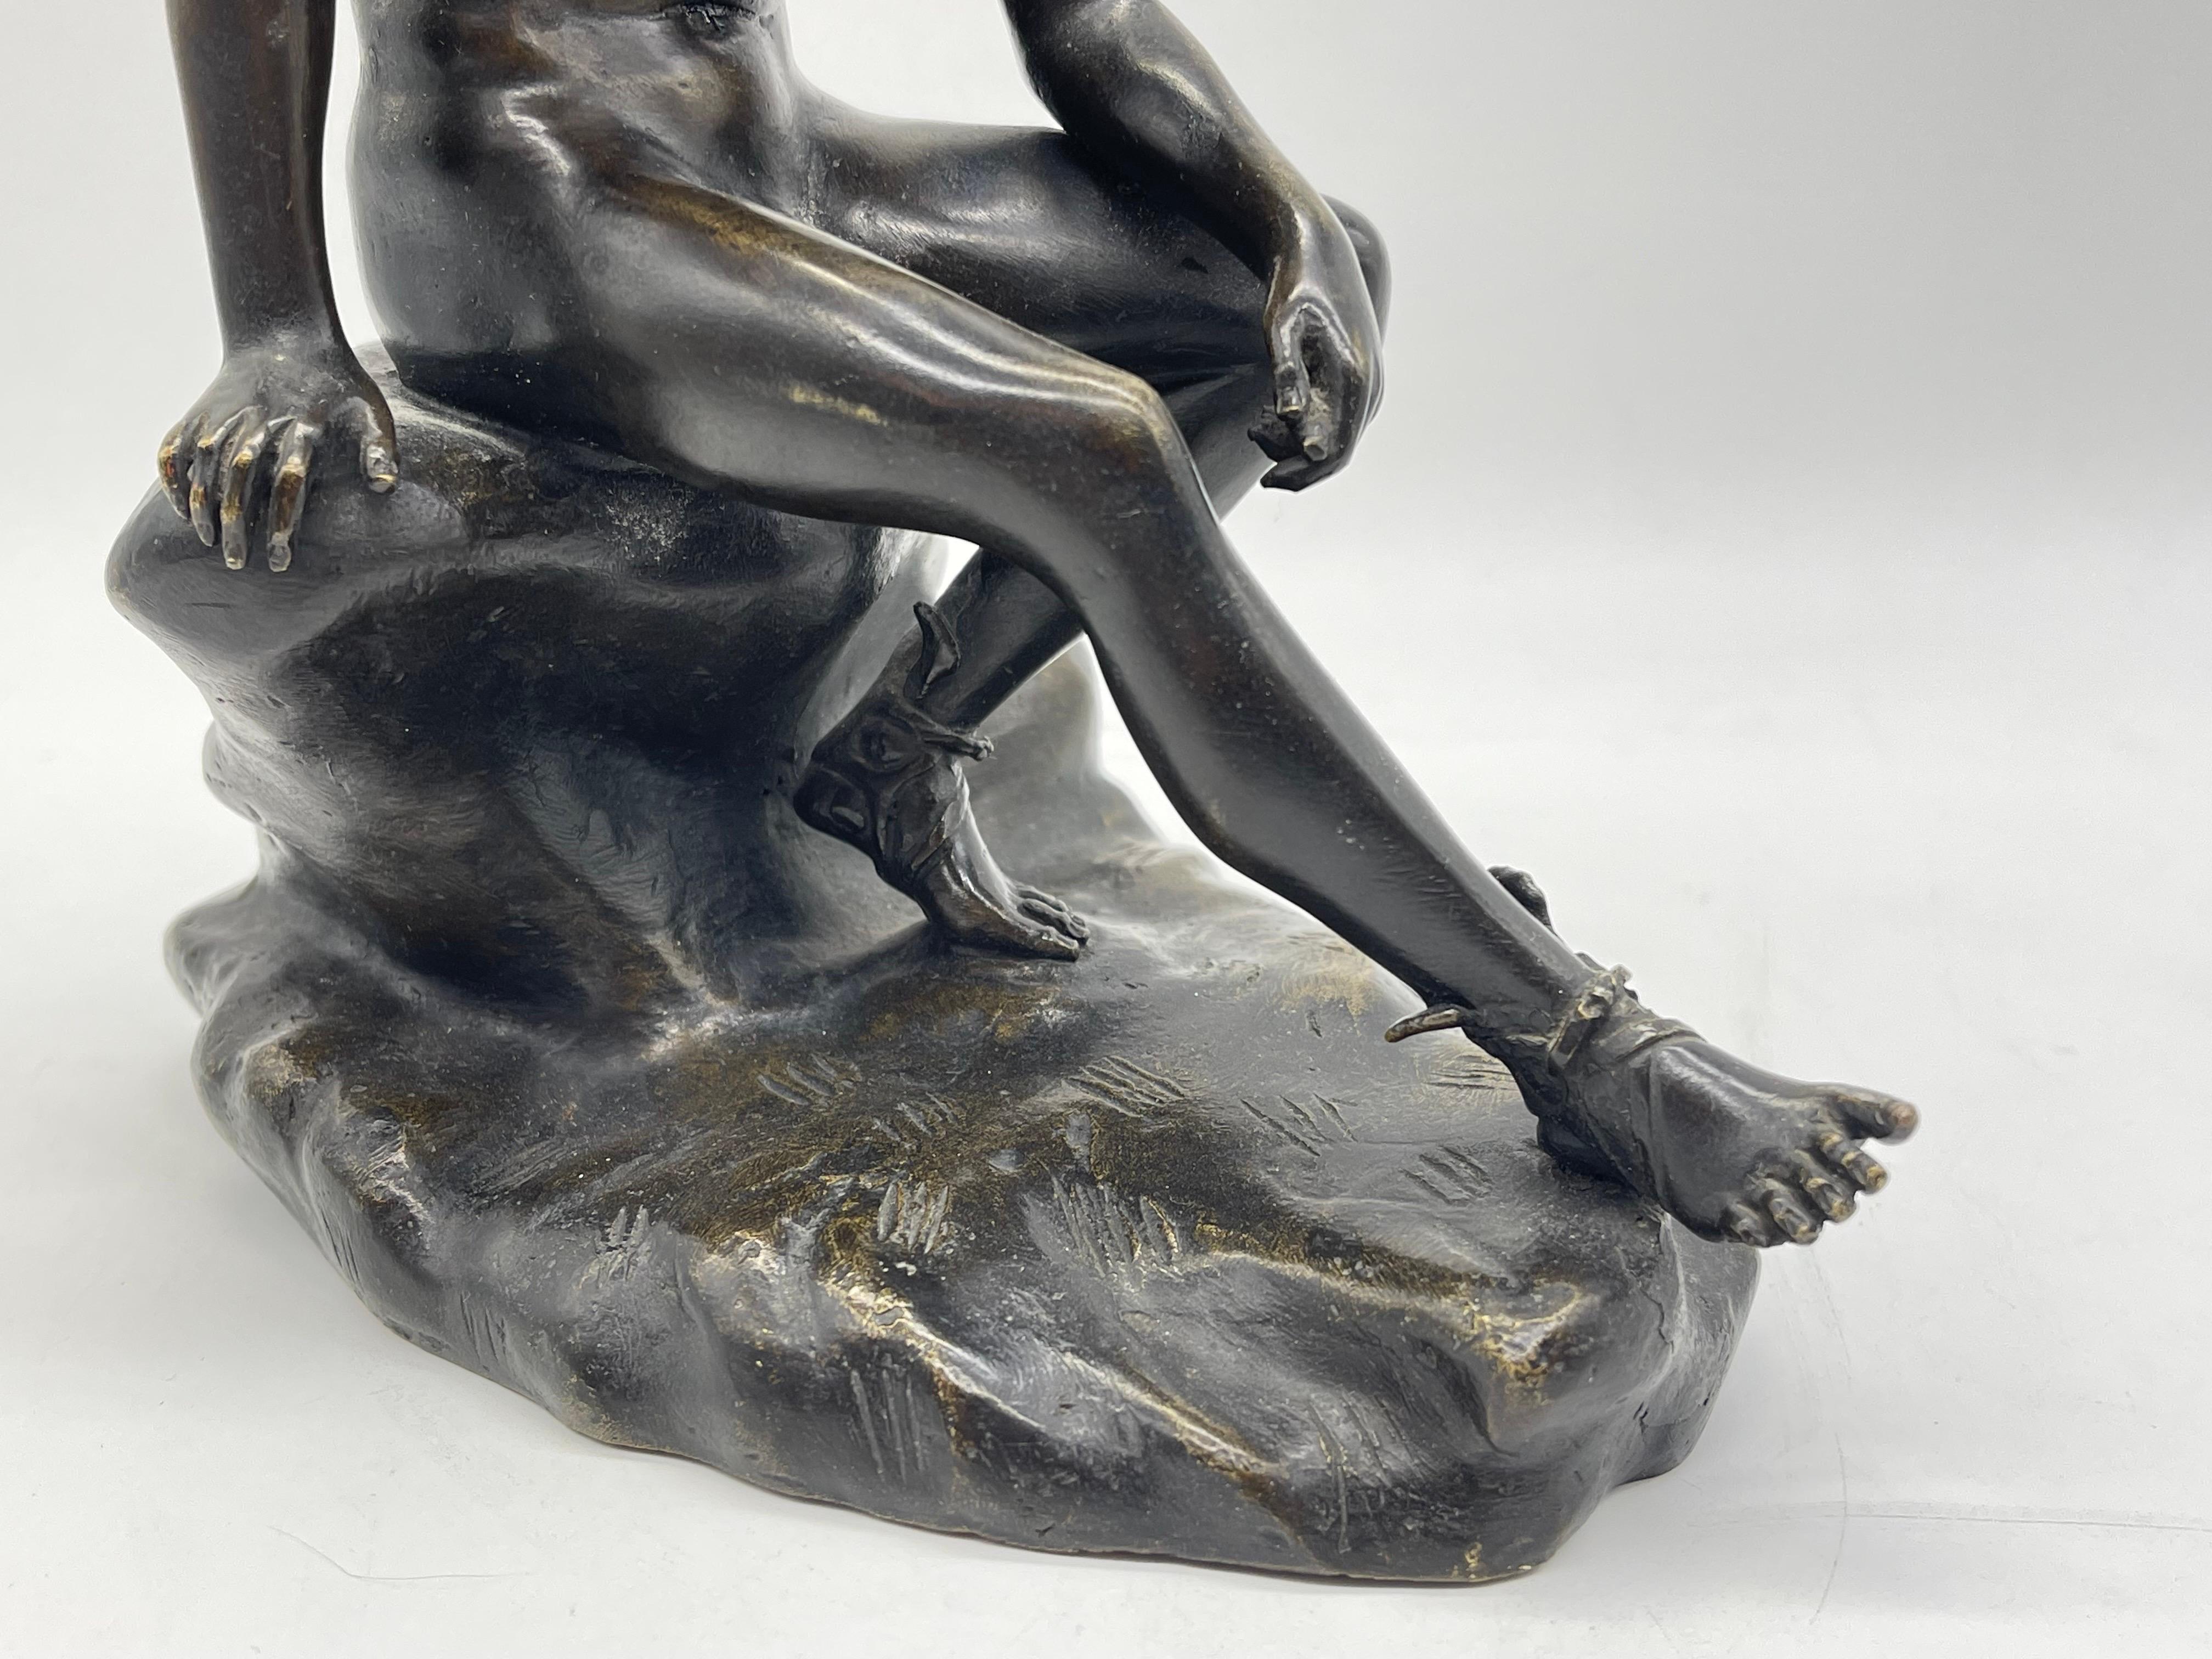 Seated athletic bronze sculpture / Figure Greek - Roman mythology For Sale 8